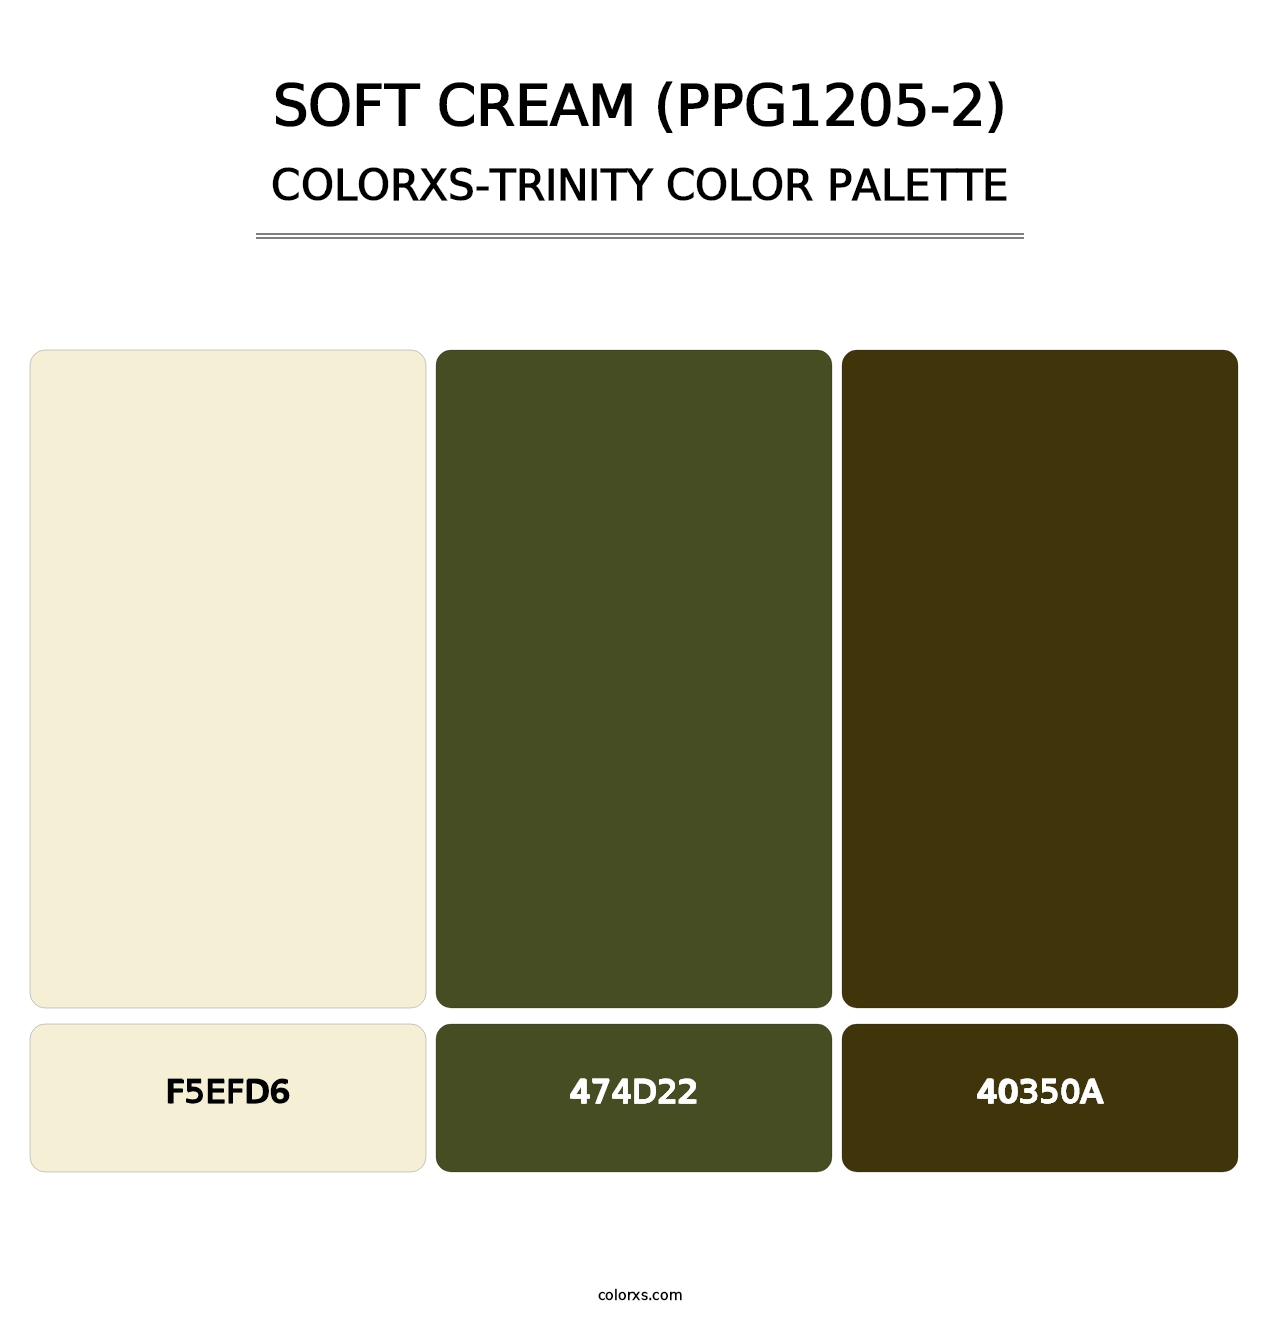 Soft Cream (PPG1205-2) - Colorxs Trinity Palette